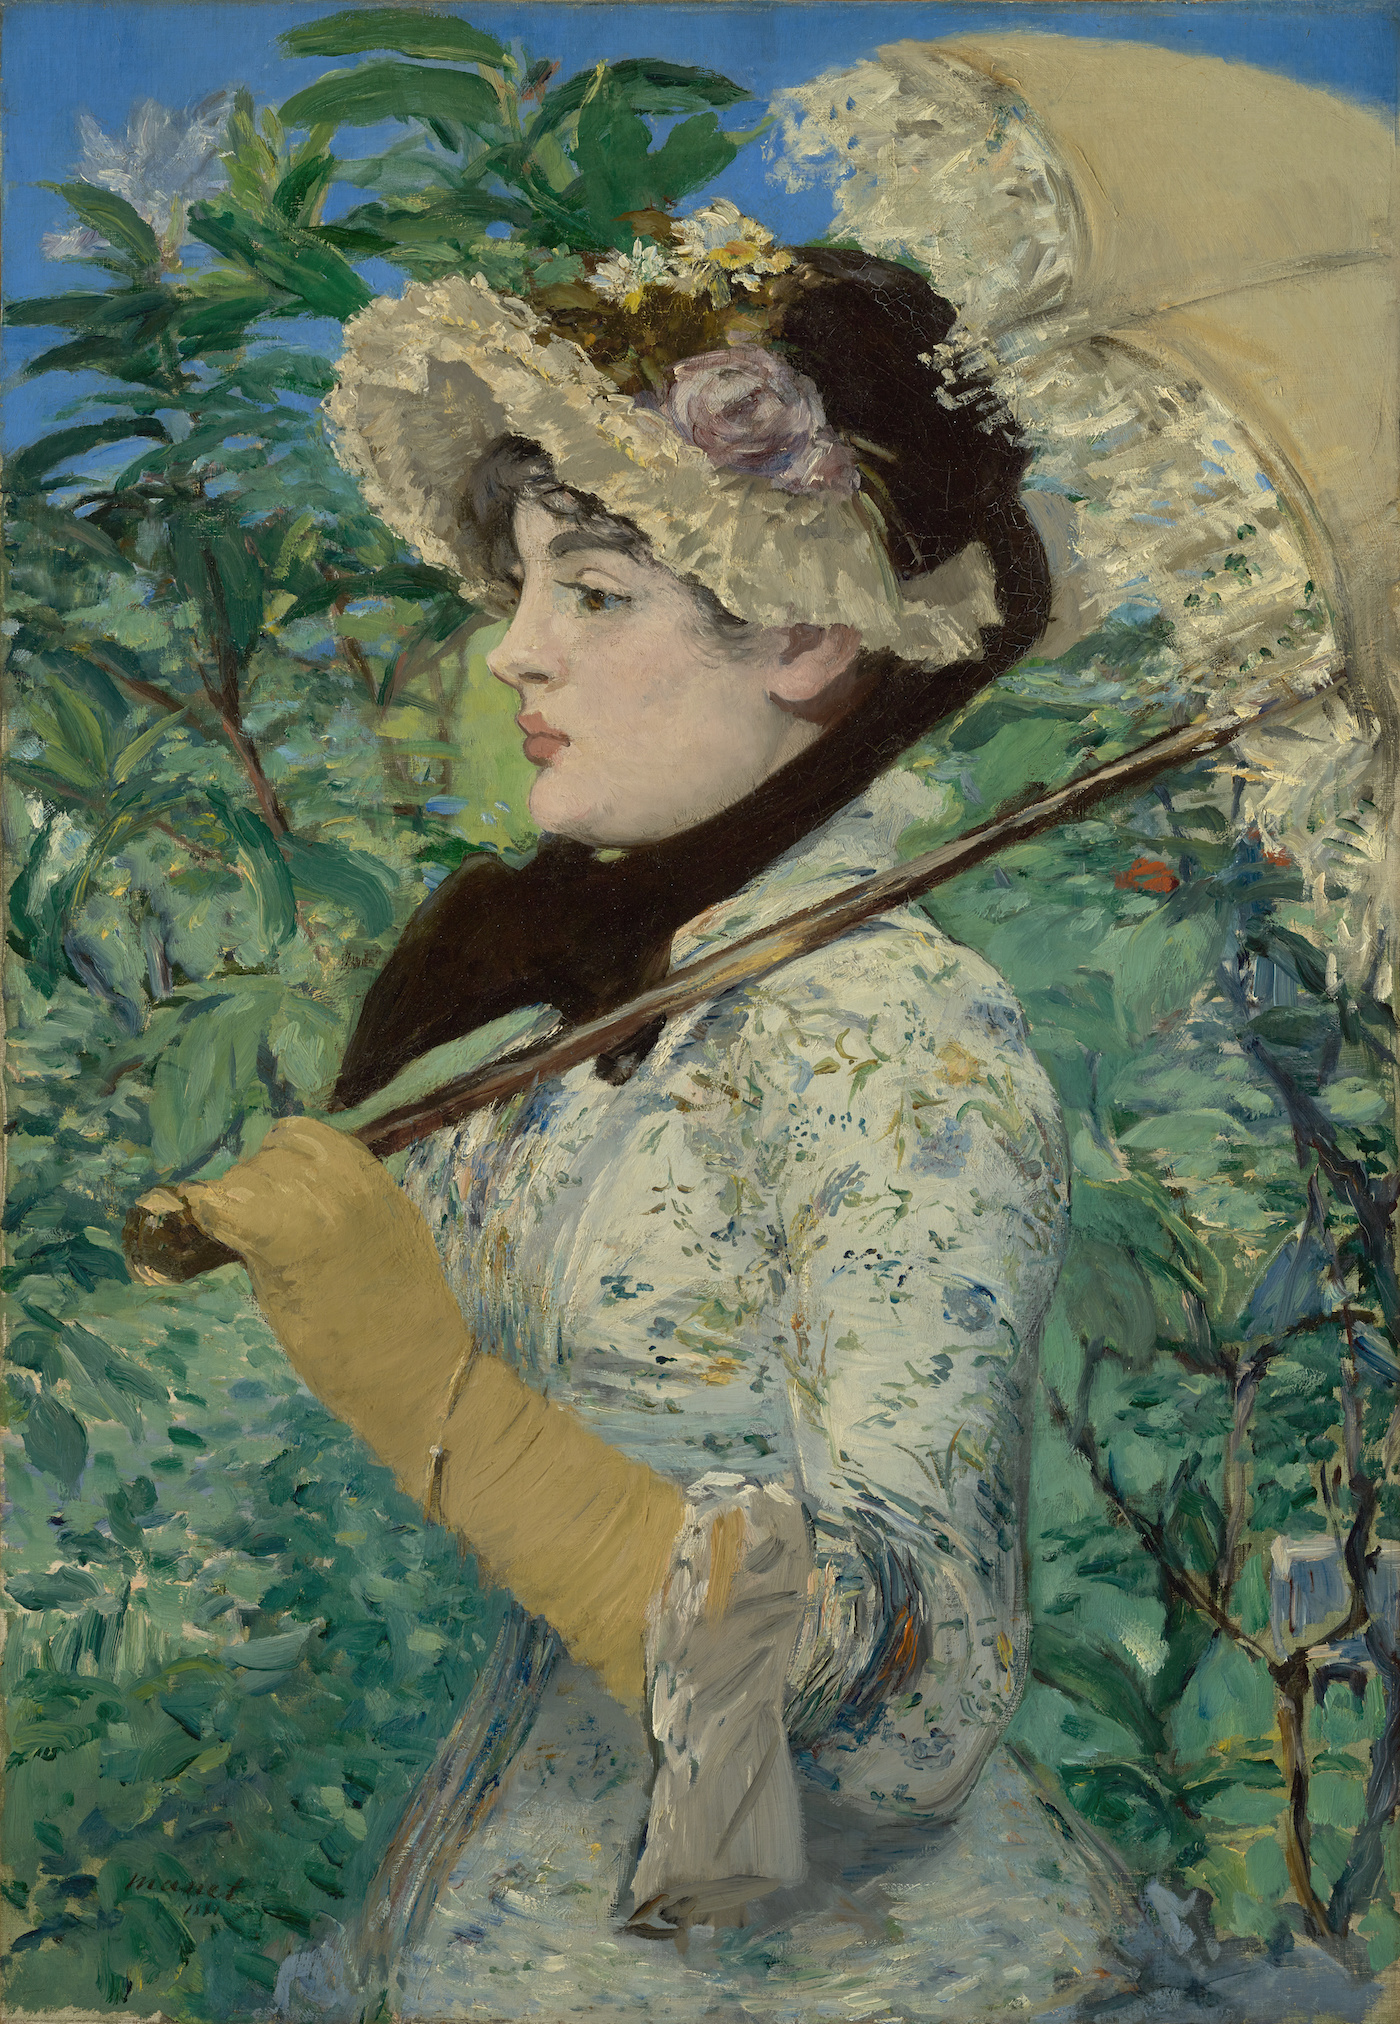 Jeanne (Spring) by Édouard Manet - 1881 - 74 × 51.5 cm J. Paul Getty Museum